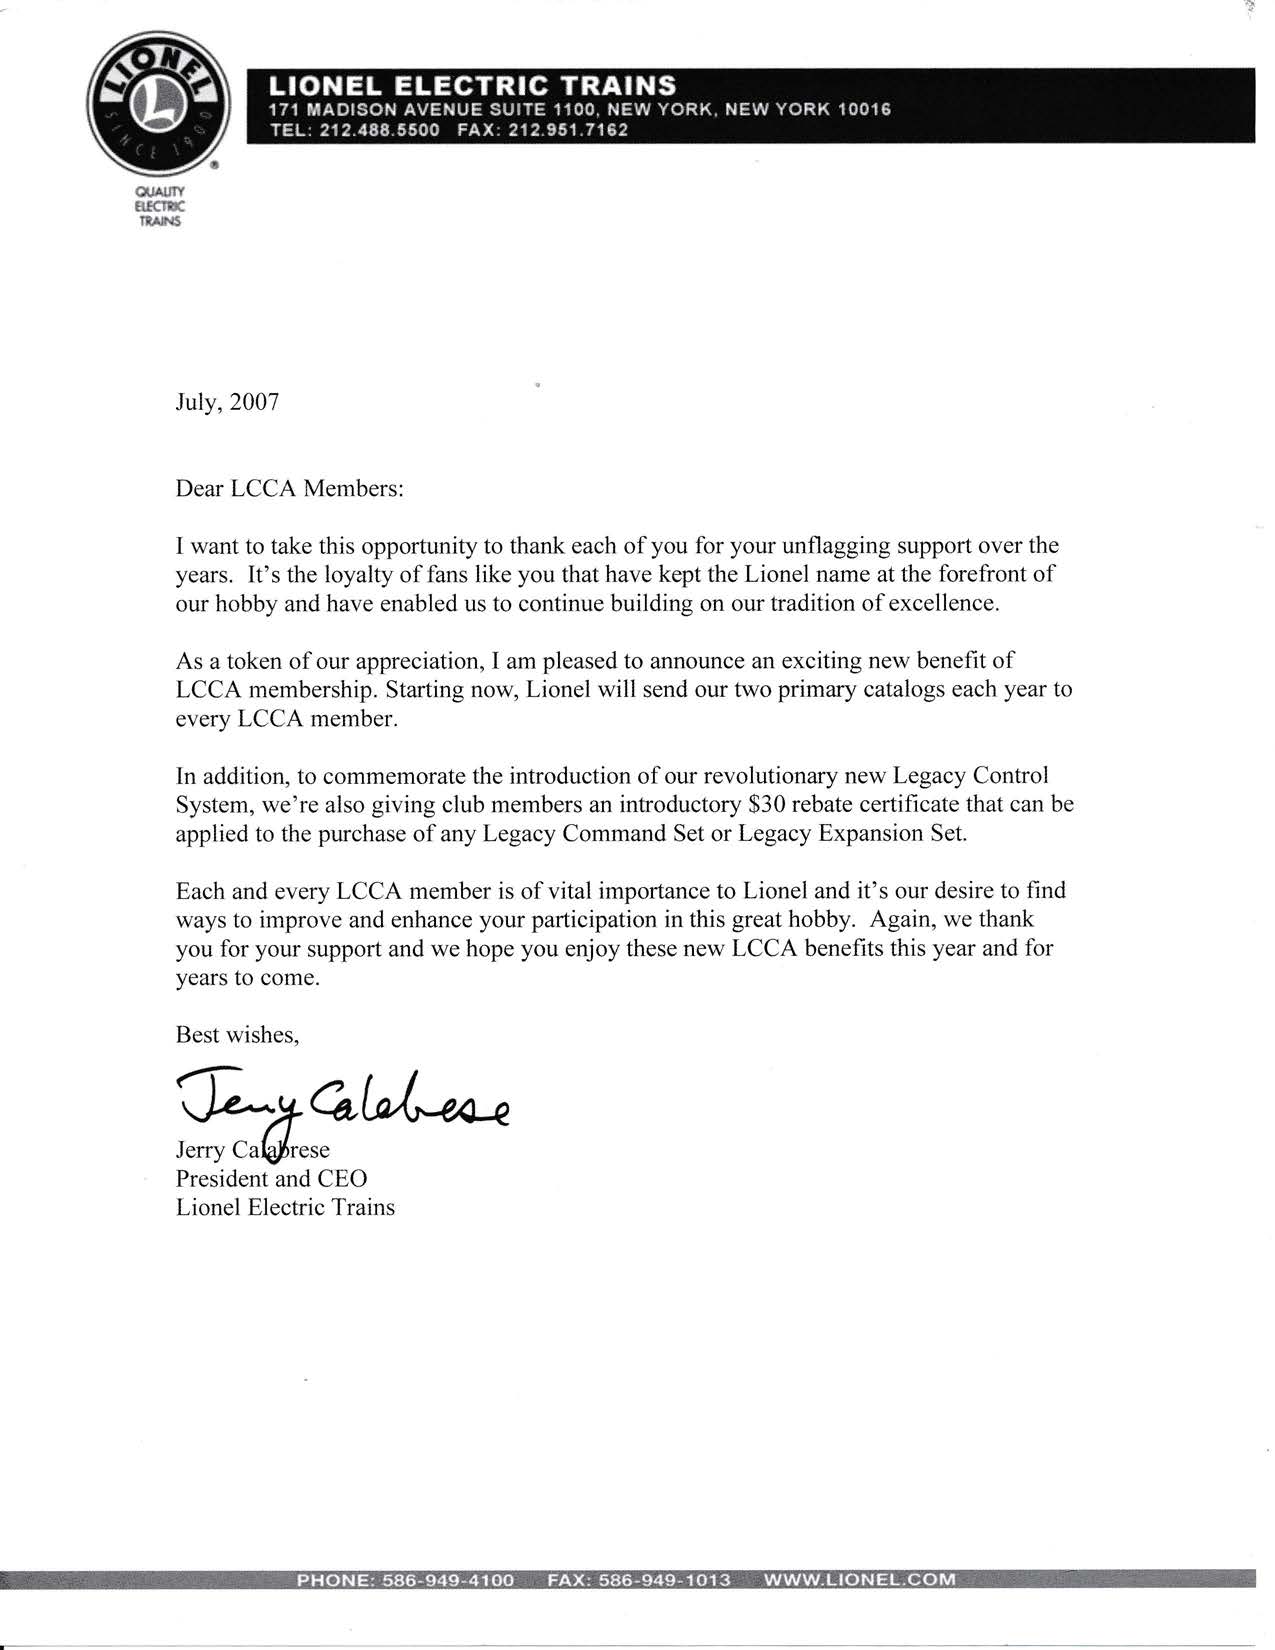 2007 LCCA Letter